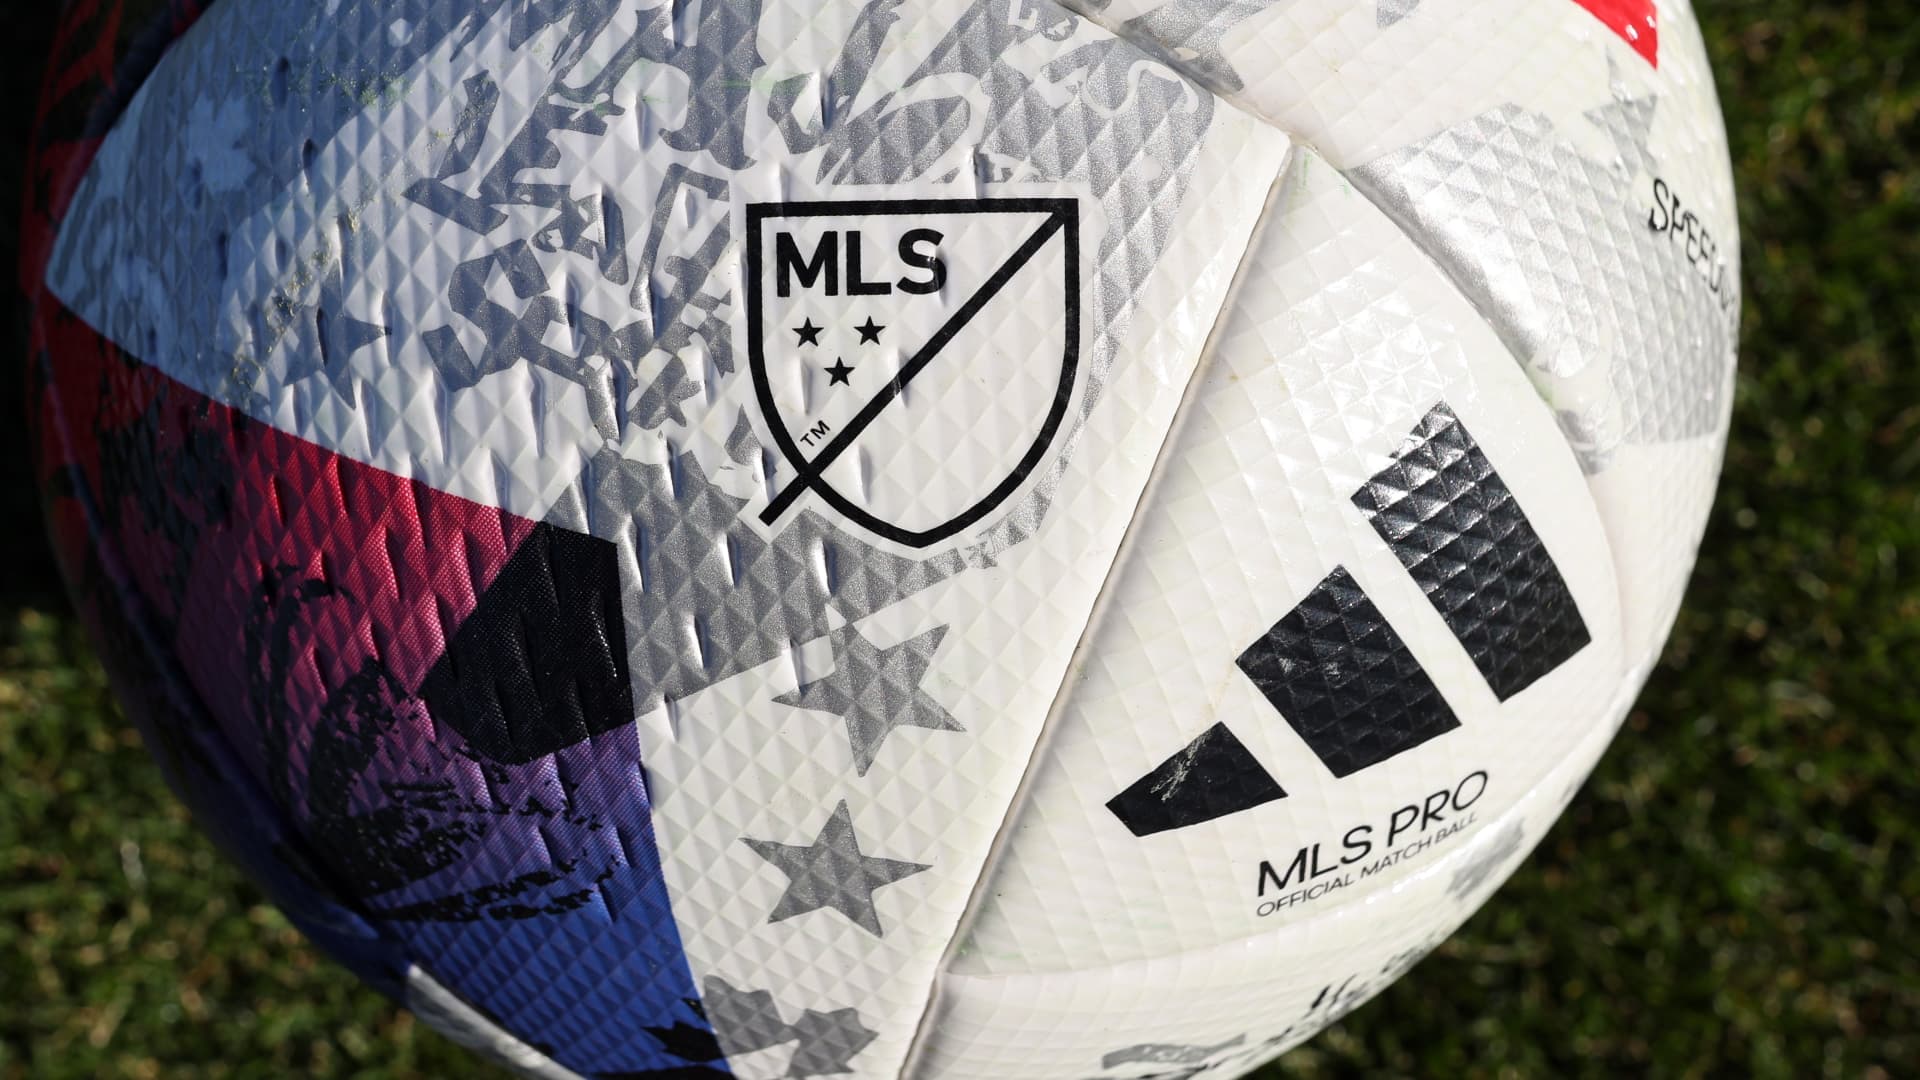 Adidas renews deal with Major League Soccer